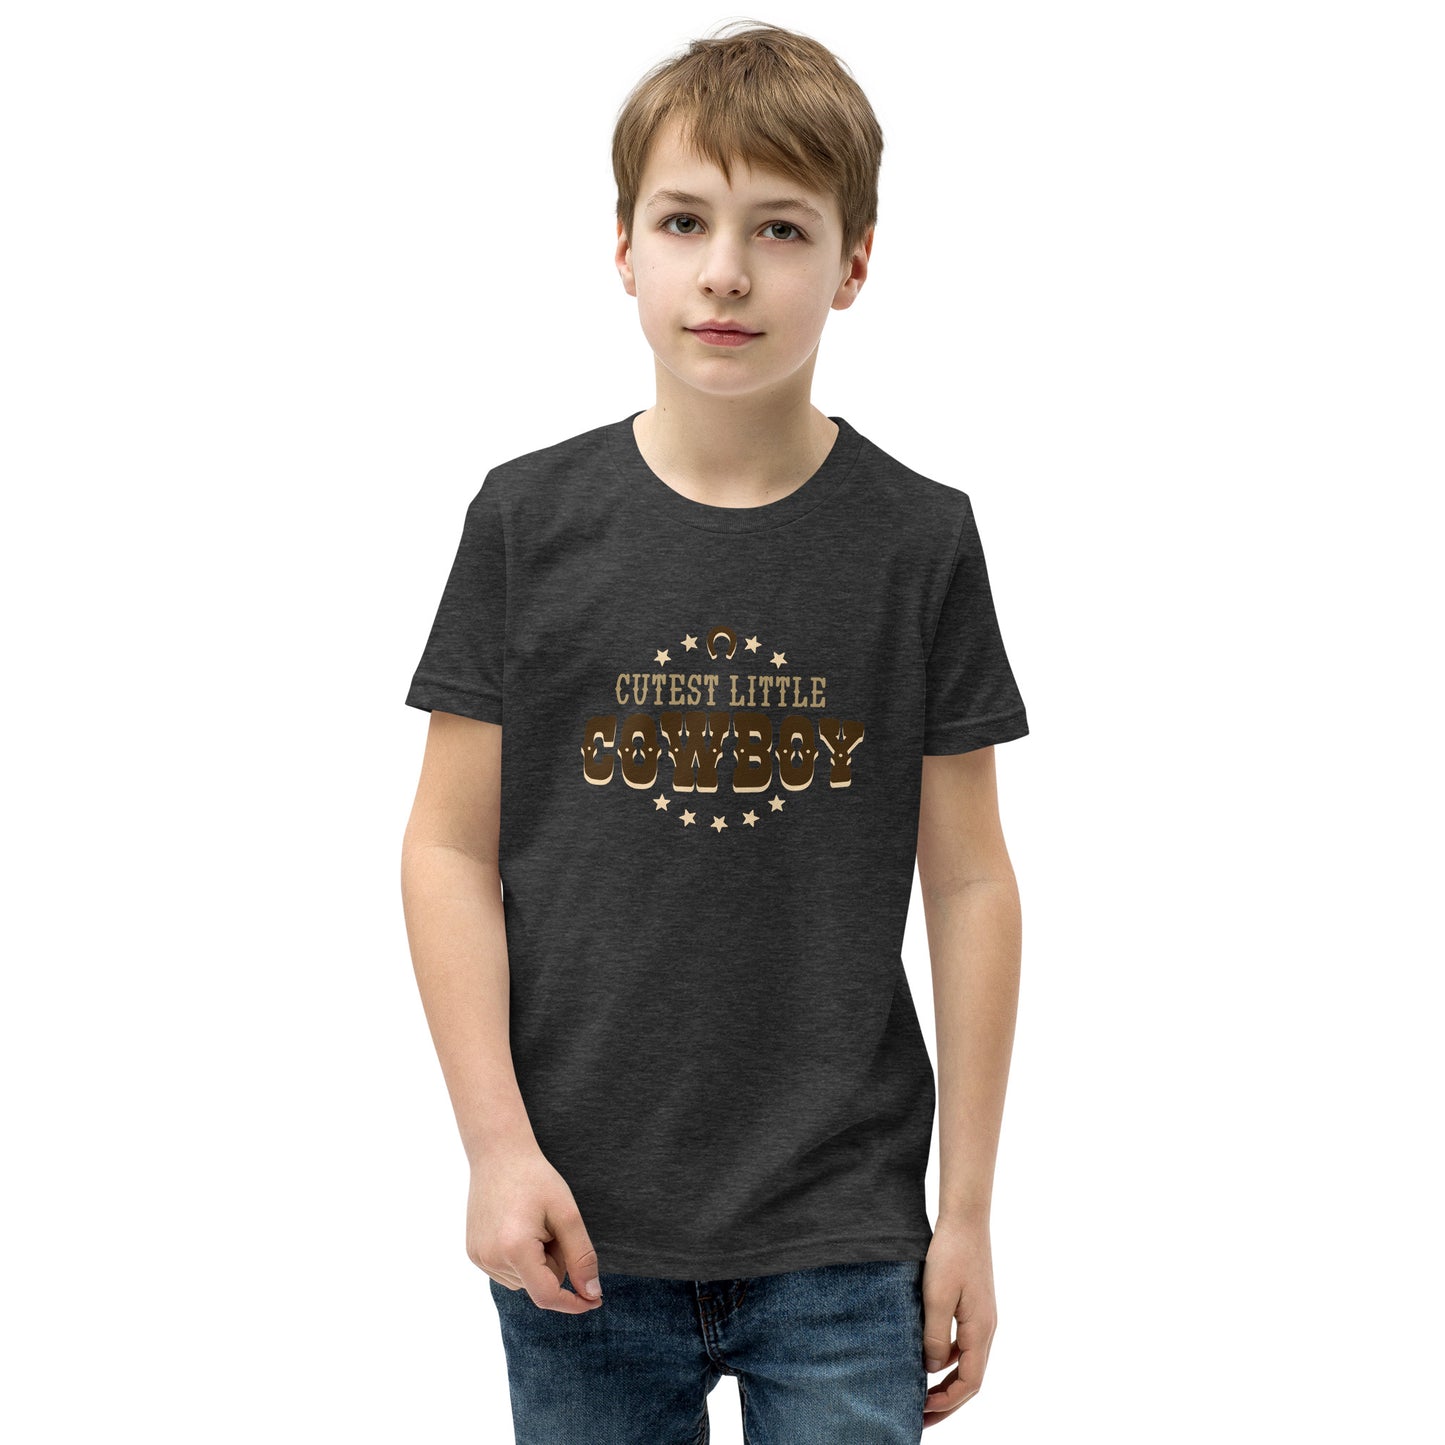 Cutest Little Cowboy Youth Short Sleeve T-Shirt